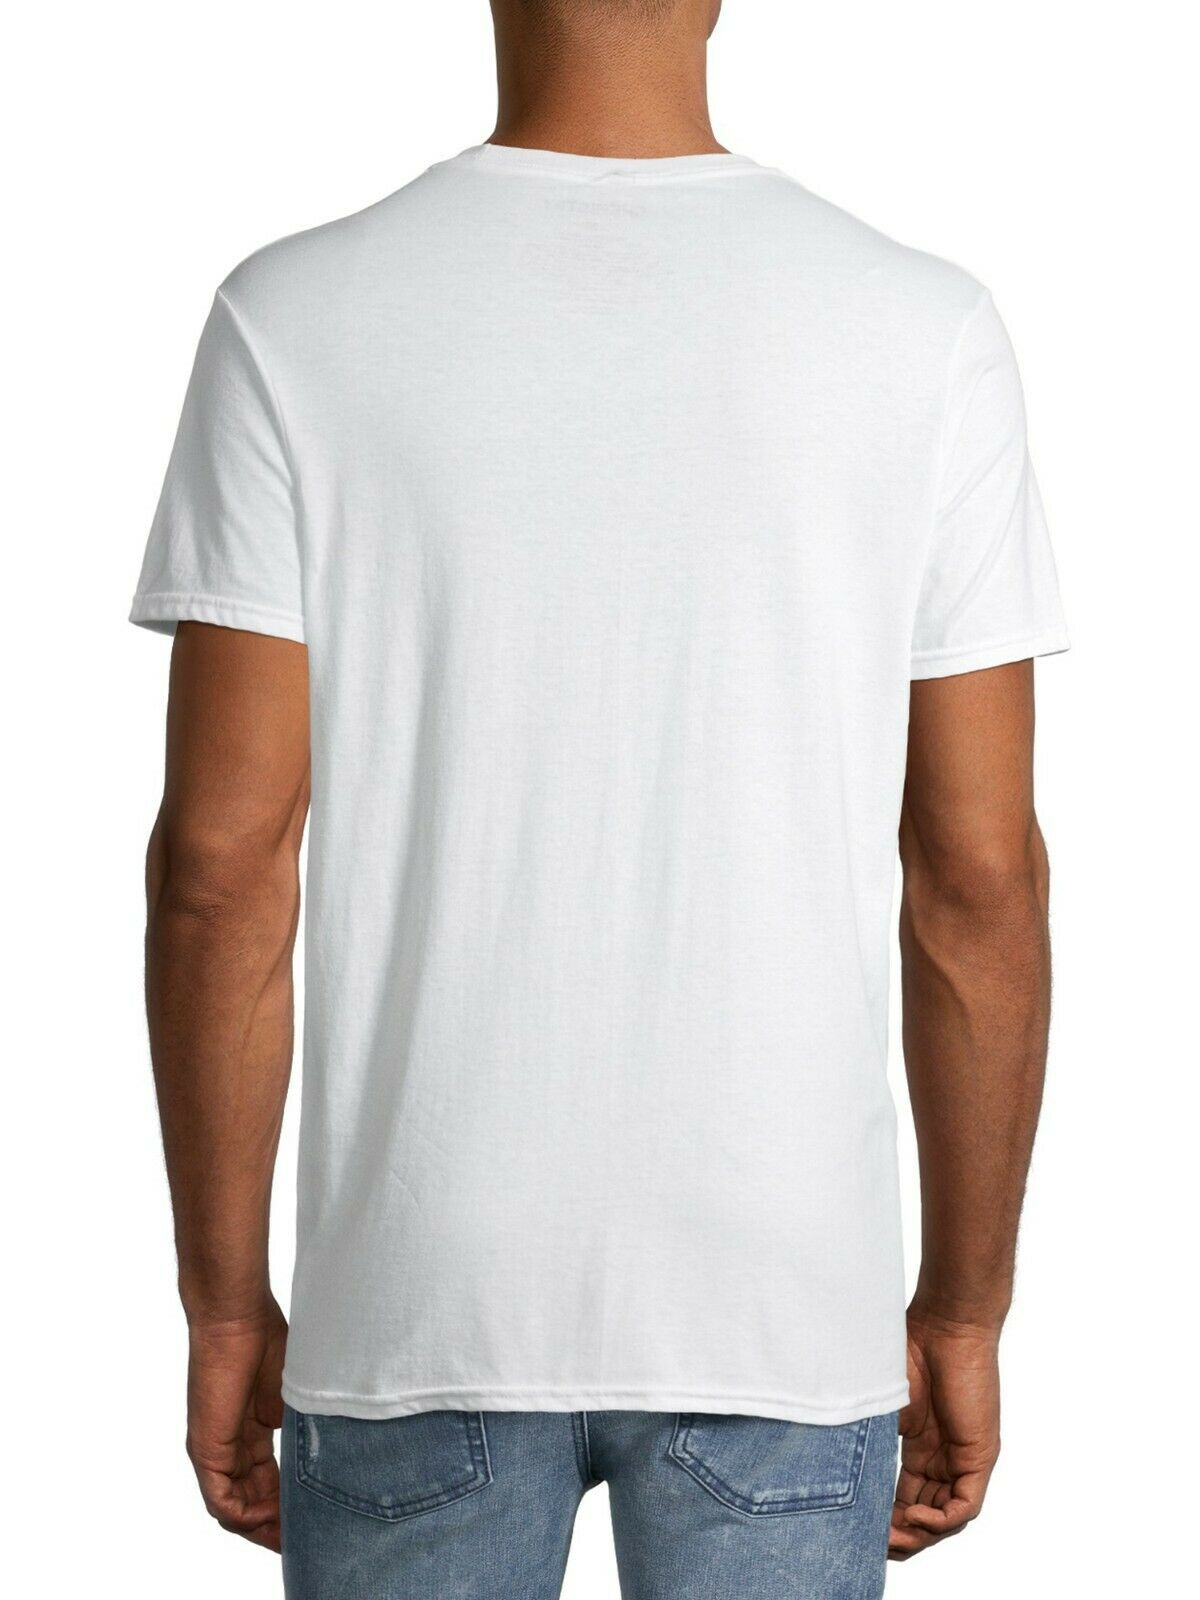 Camiseta blanca con gráfico Chevrolet Corvette Chevy para hombre